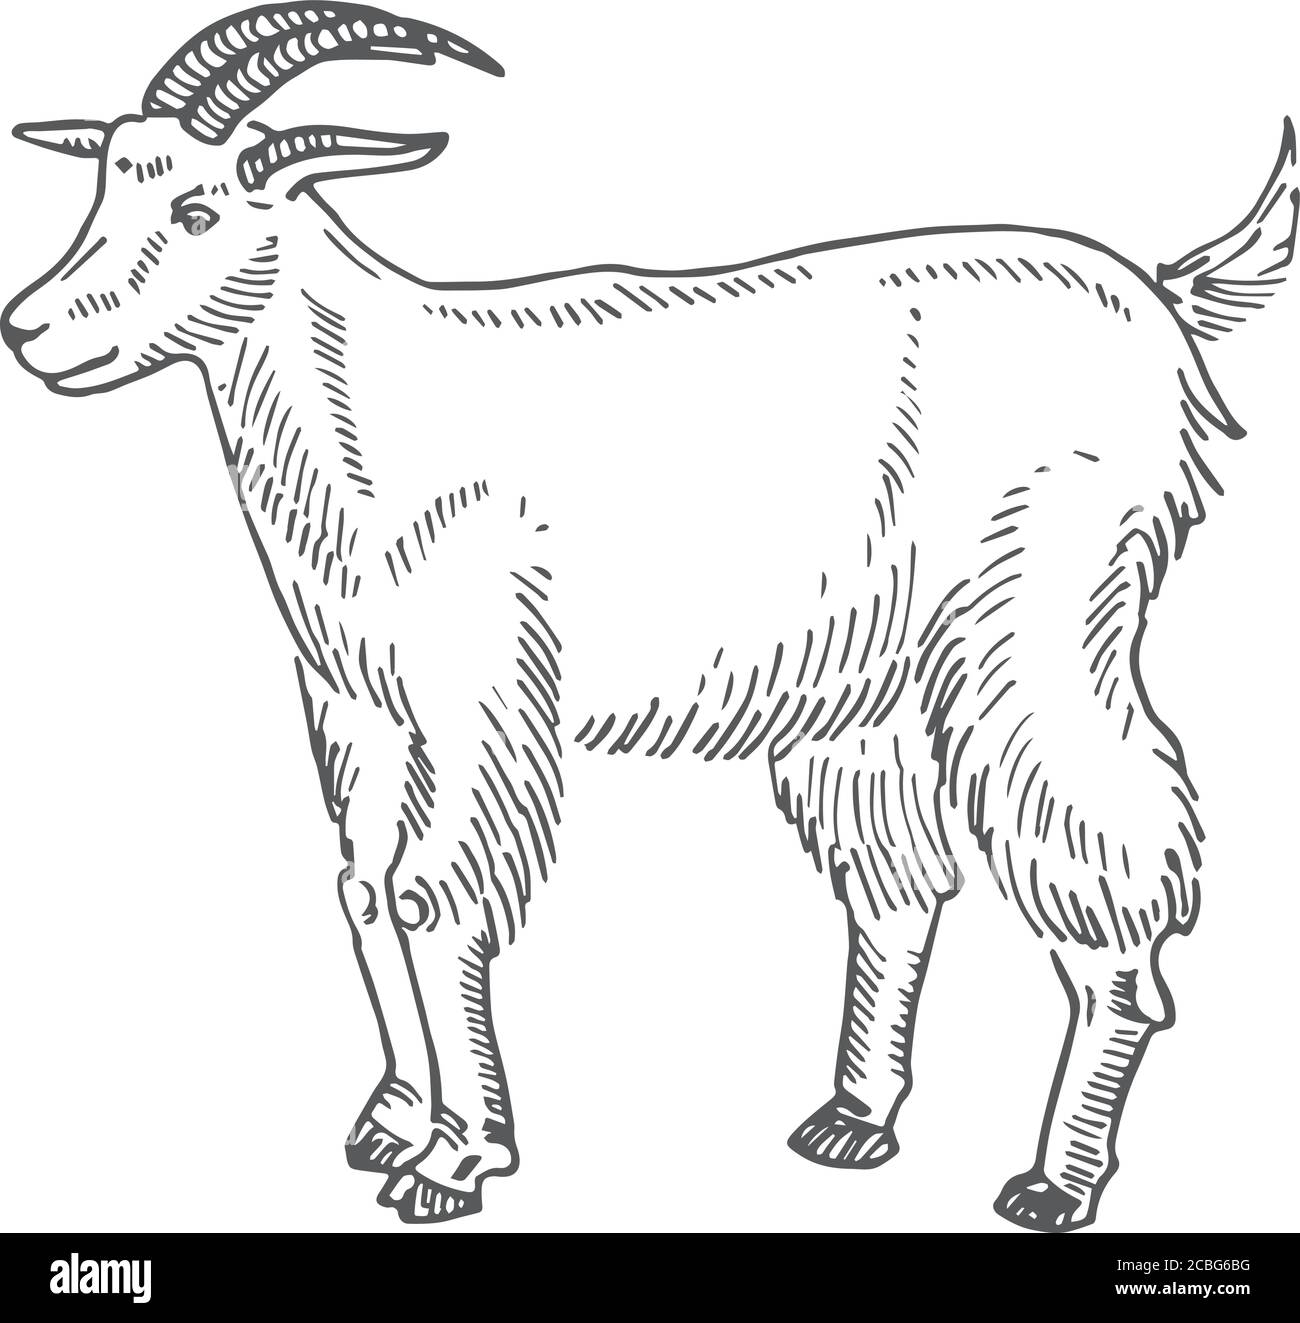 Goat Hand Drawn Vector Illustration. Abstract Domestic Animal ...